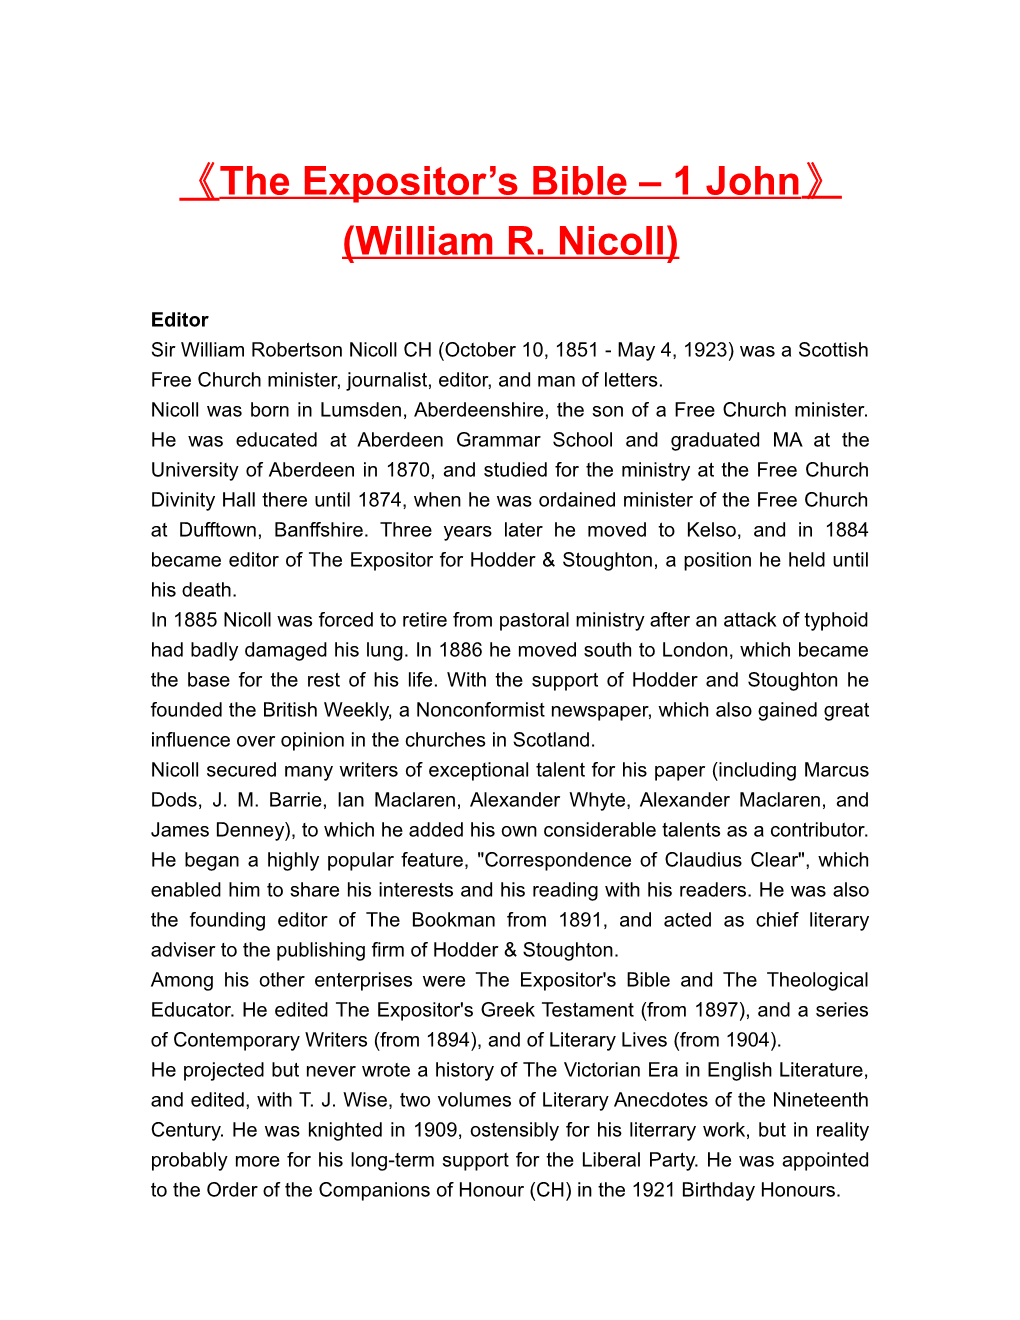 The Expositor S Bible 1 John (William R. Nicoll)